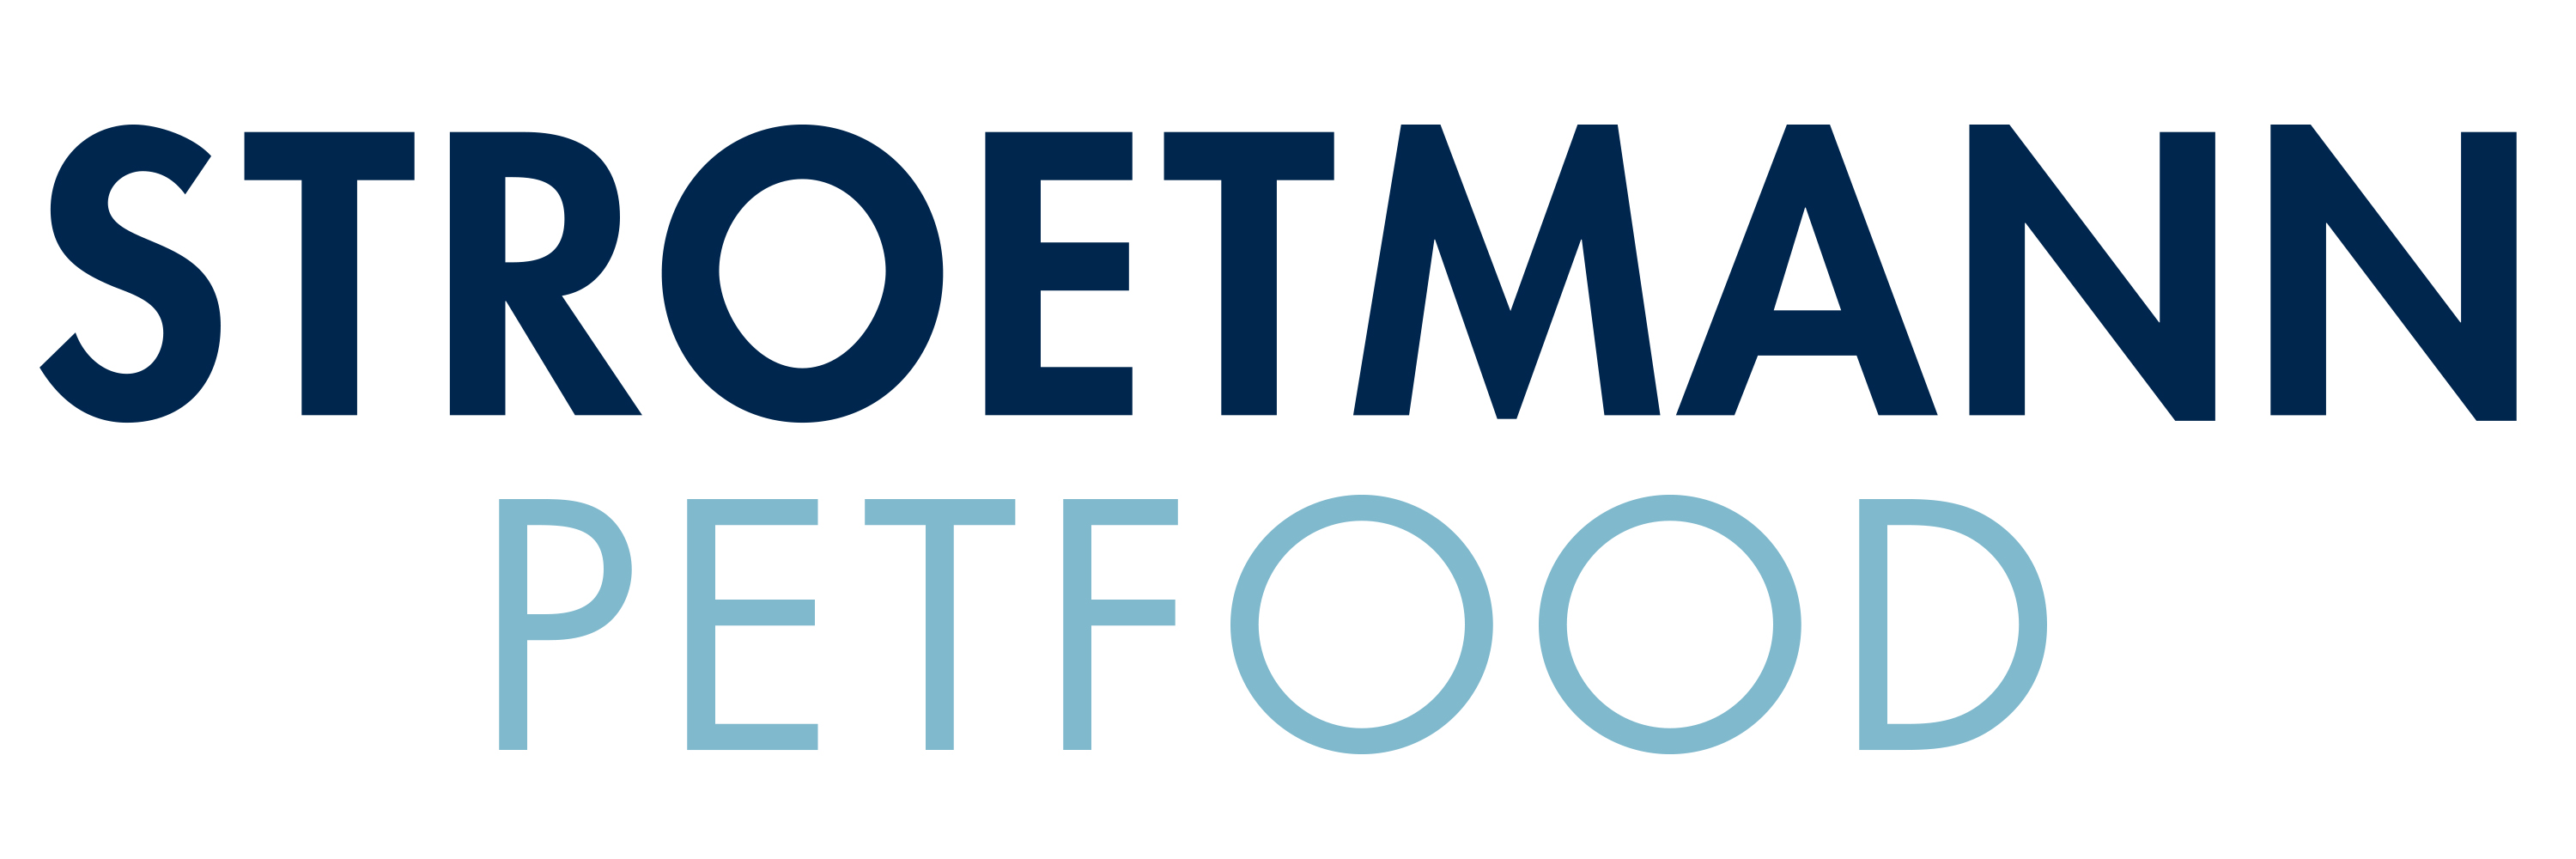 Logo: Stroetmann Petfood